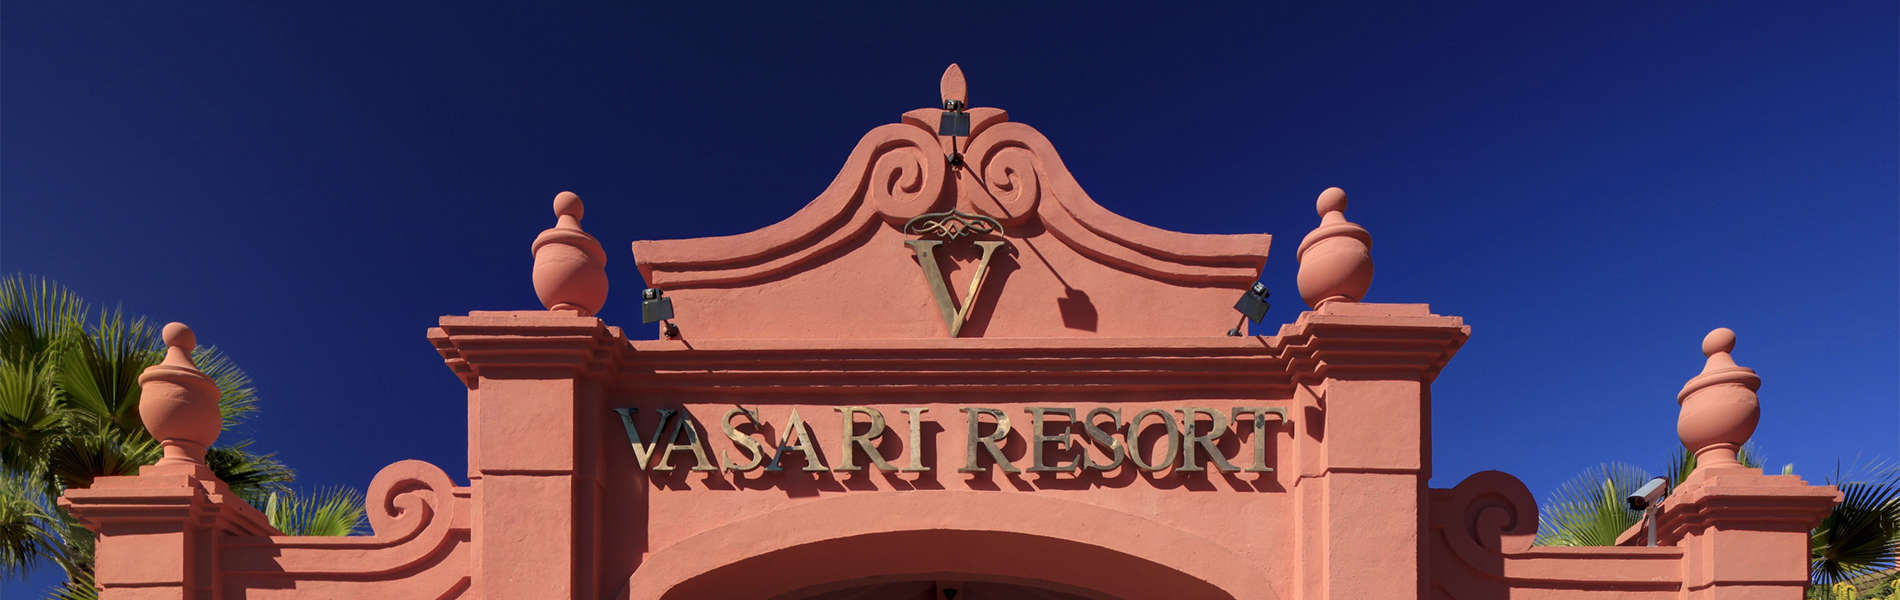 Vasari Vacation Resort